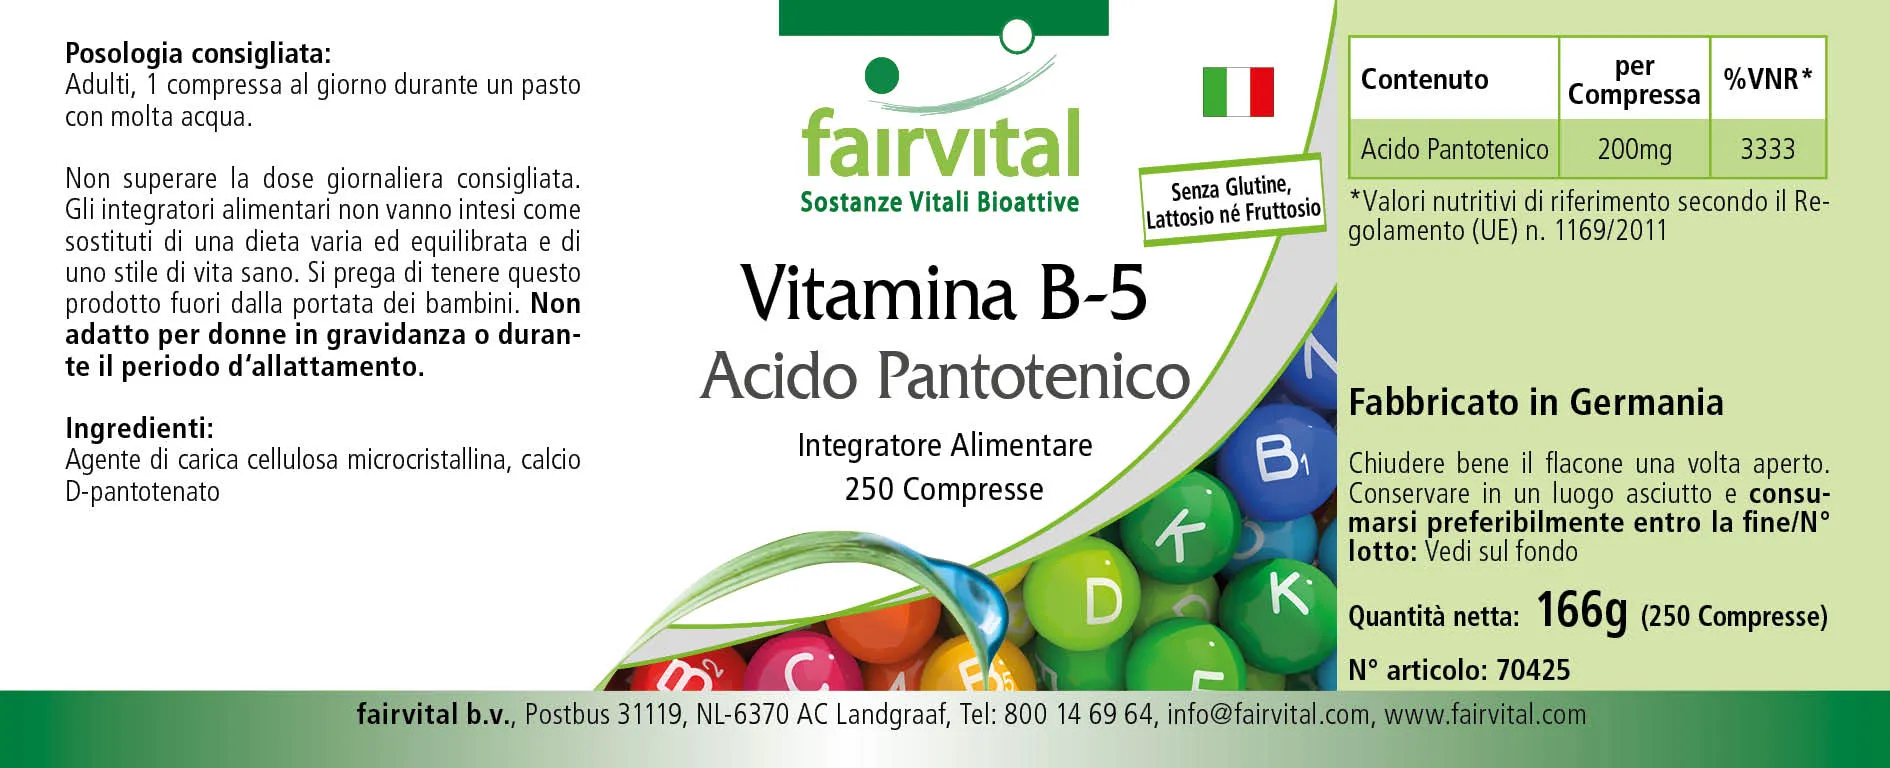 Vitamine B-5 pantotheenzuur 200mg - 250 tabletten